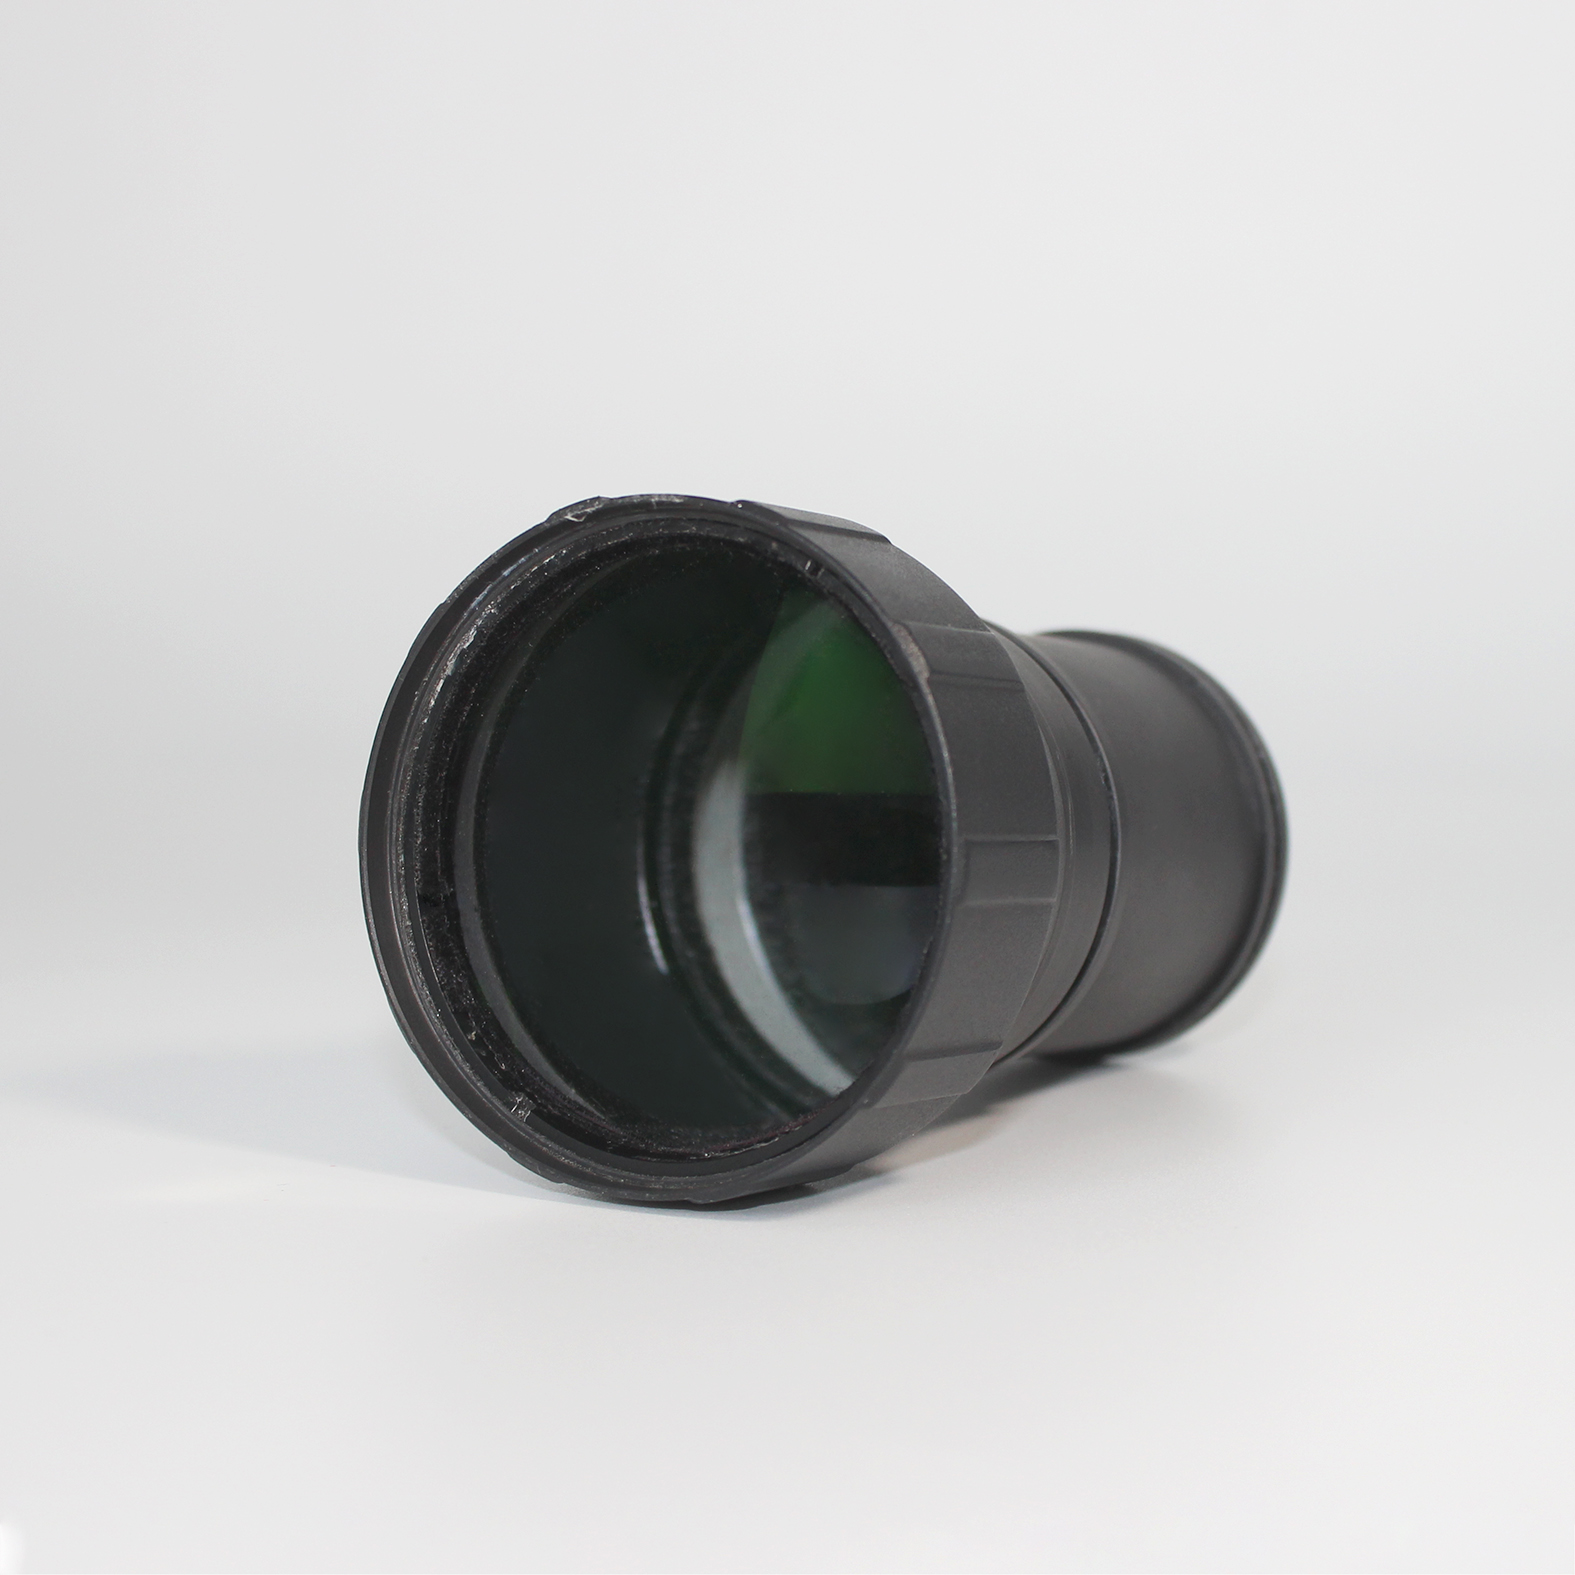 Low Light Night Vision Binoculars Lens for Hunting